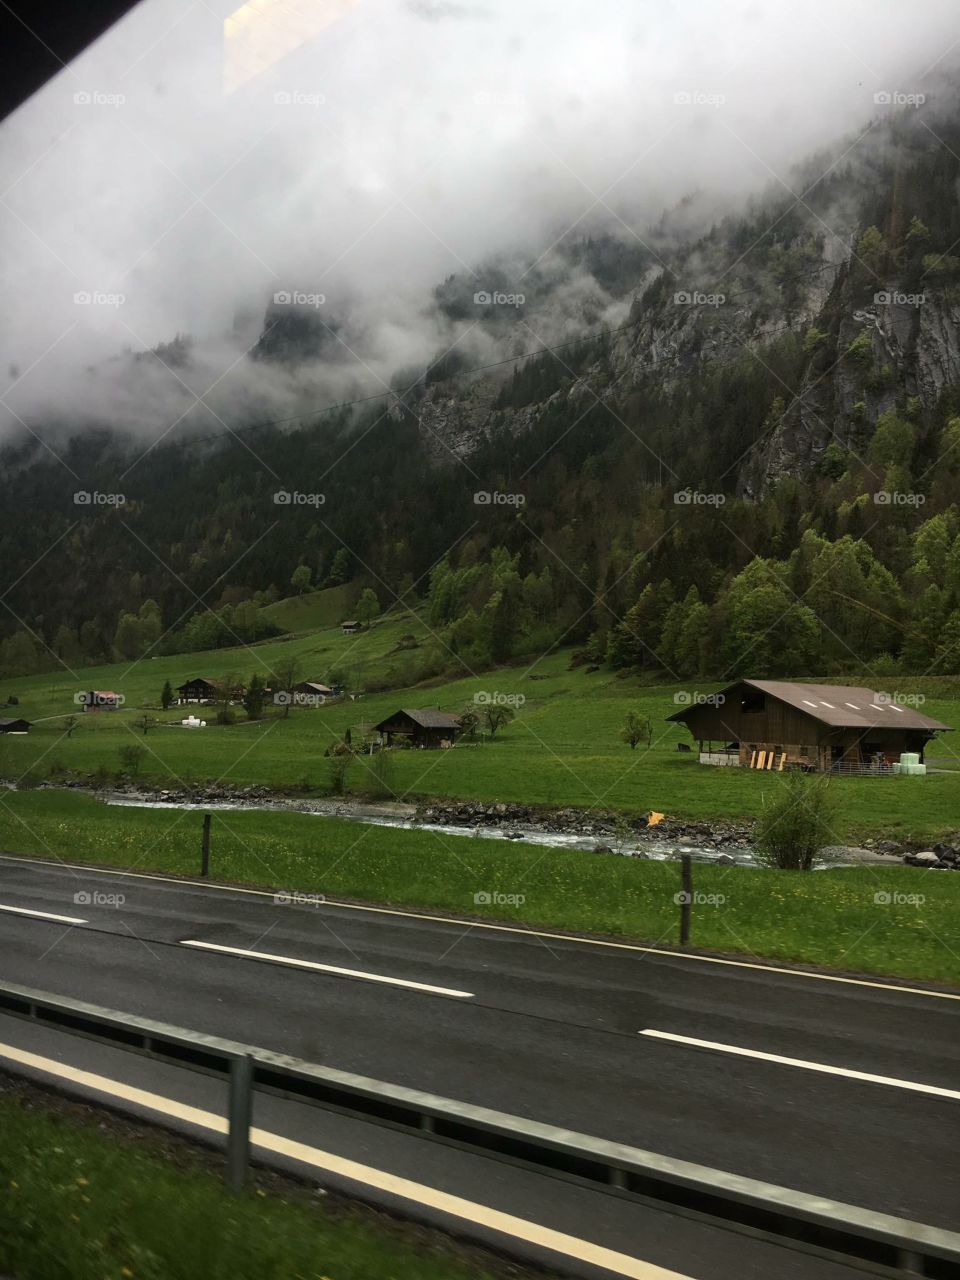 Foggy morning in Switzerland village 